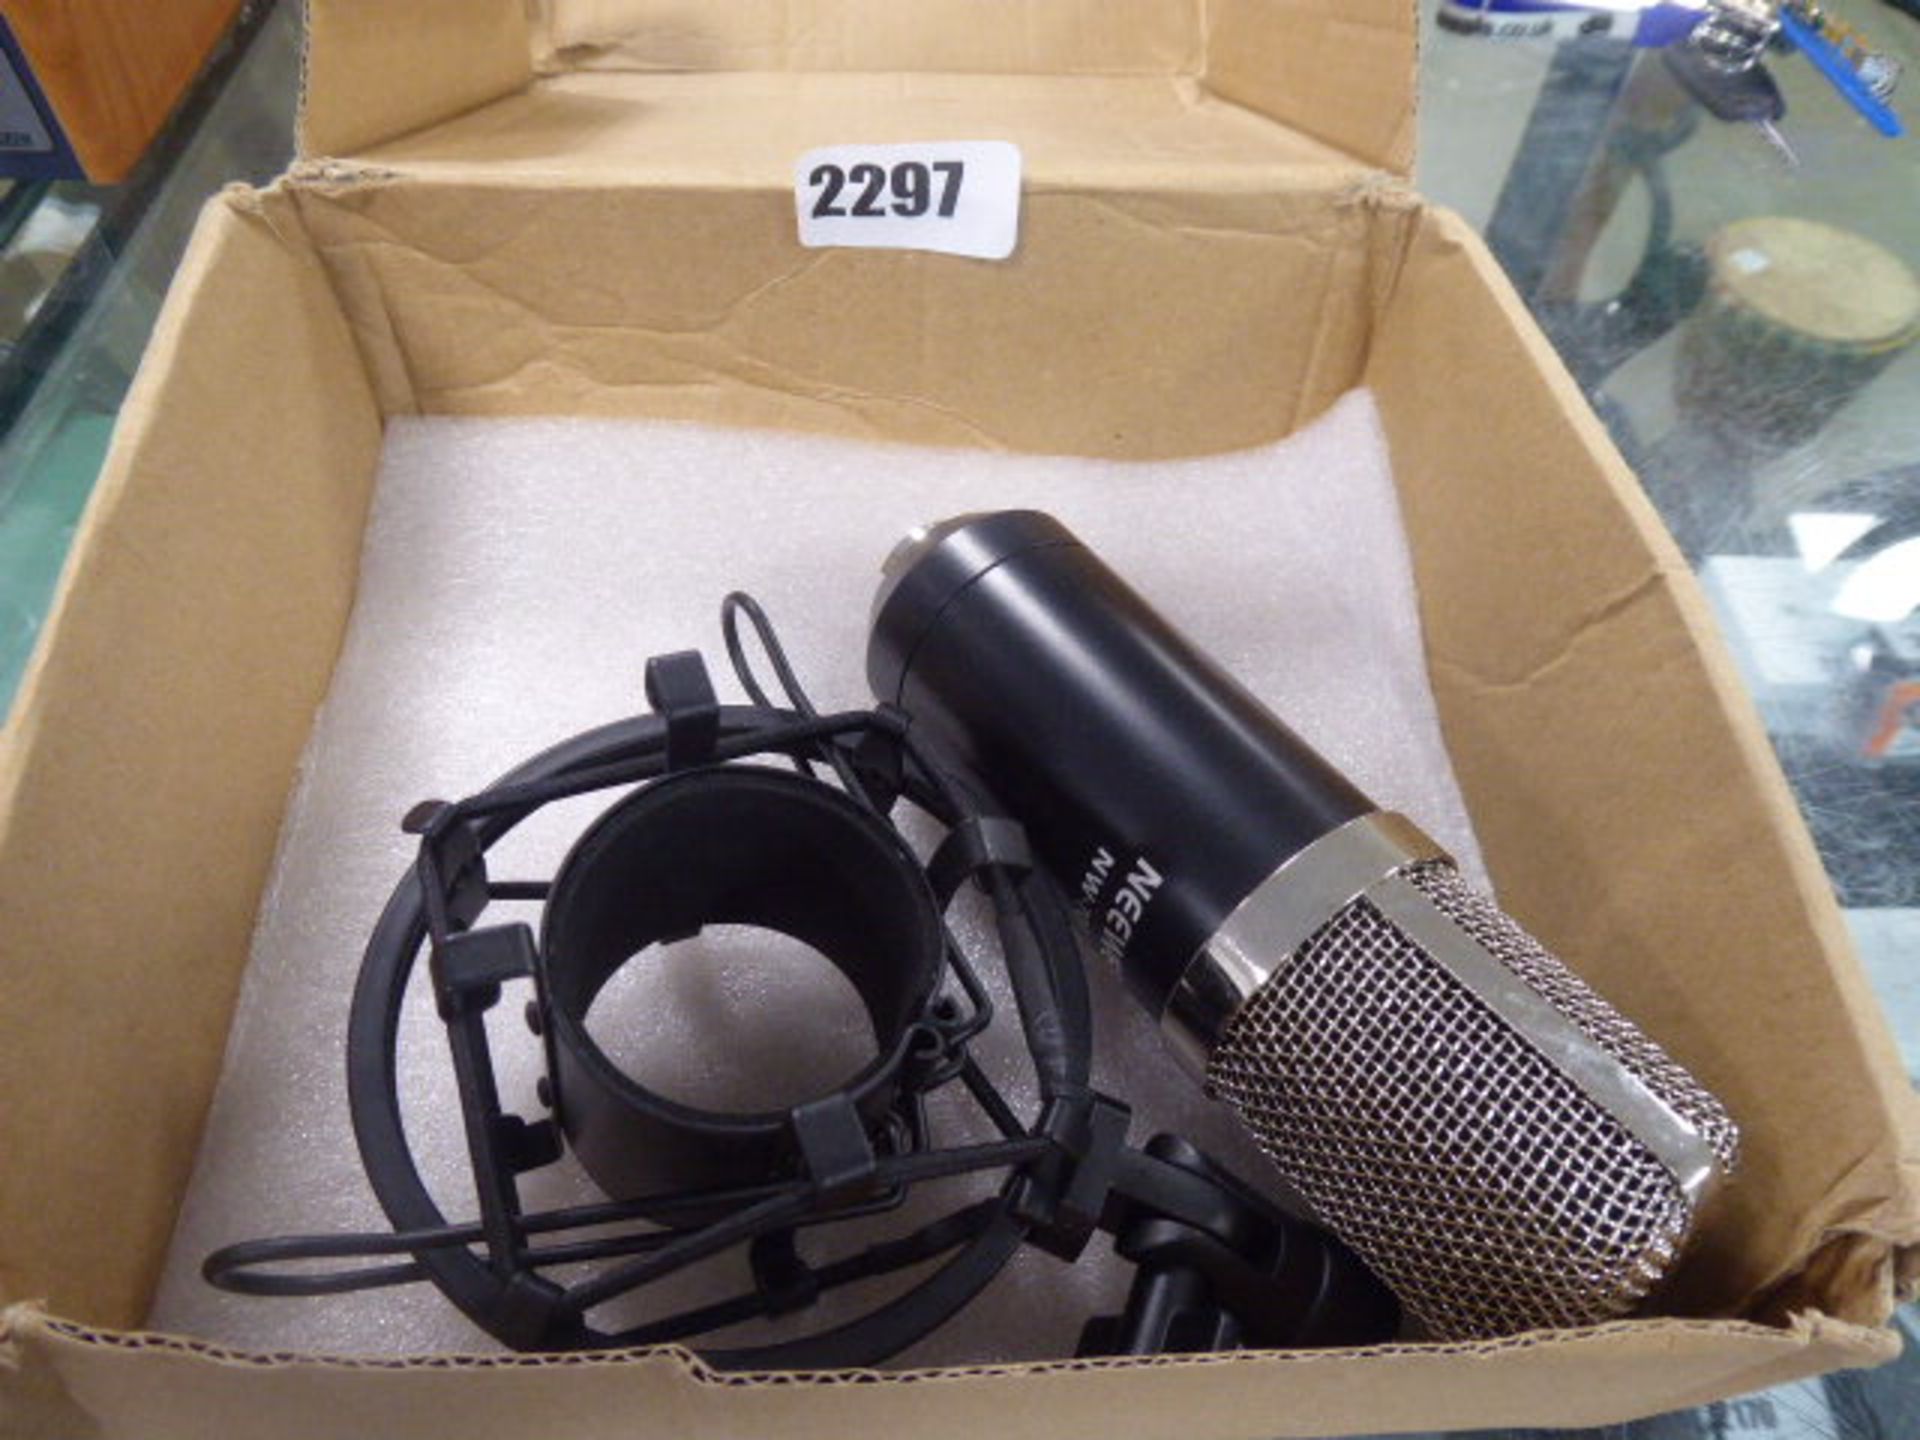 Neewer condensor microphone in box